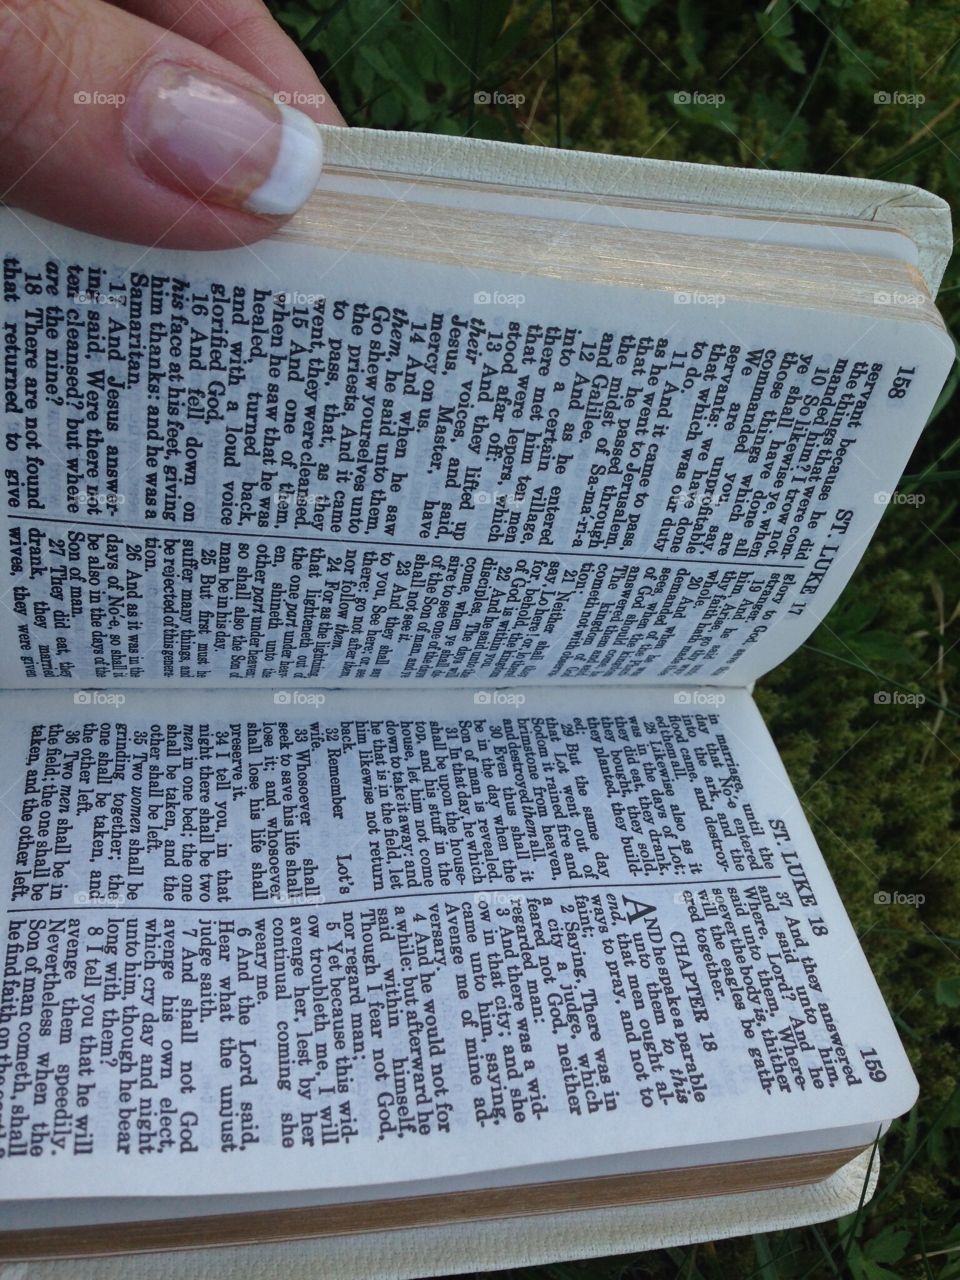 Holy Bible opened to Luke. Holy Bible opened to the book of Luke